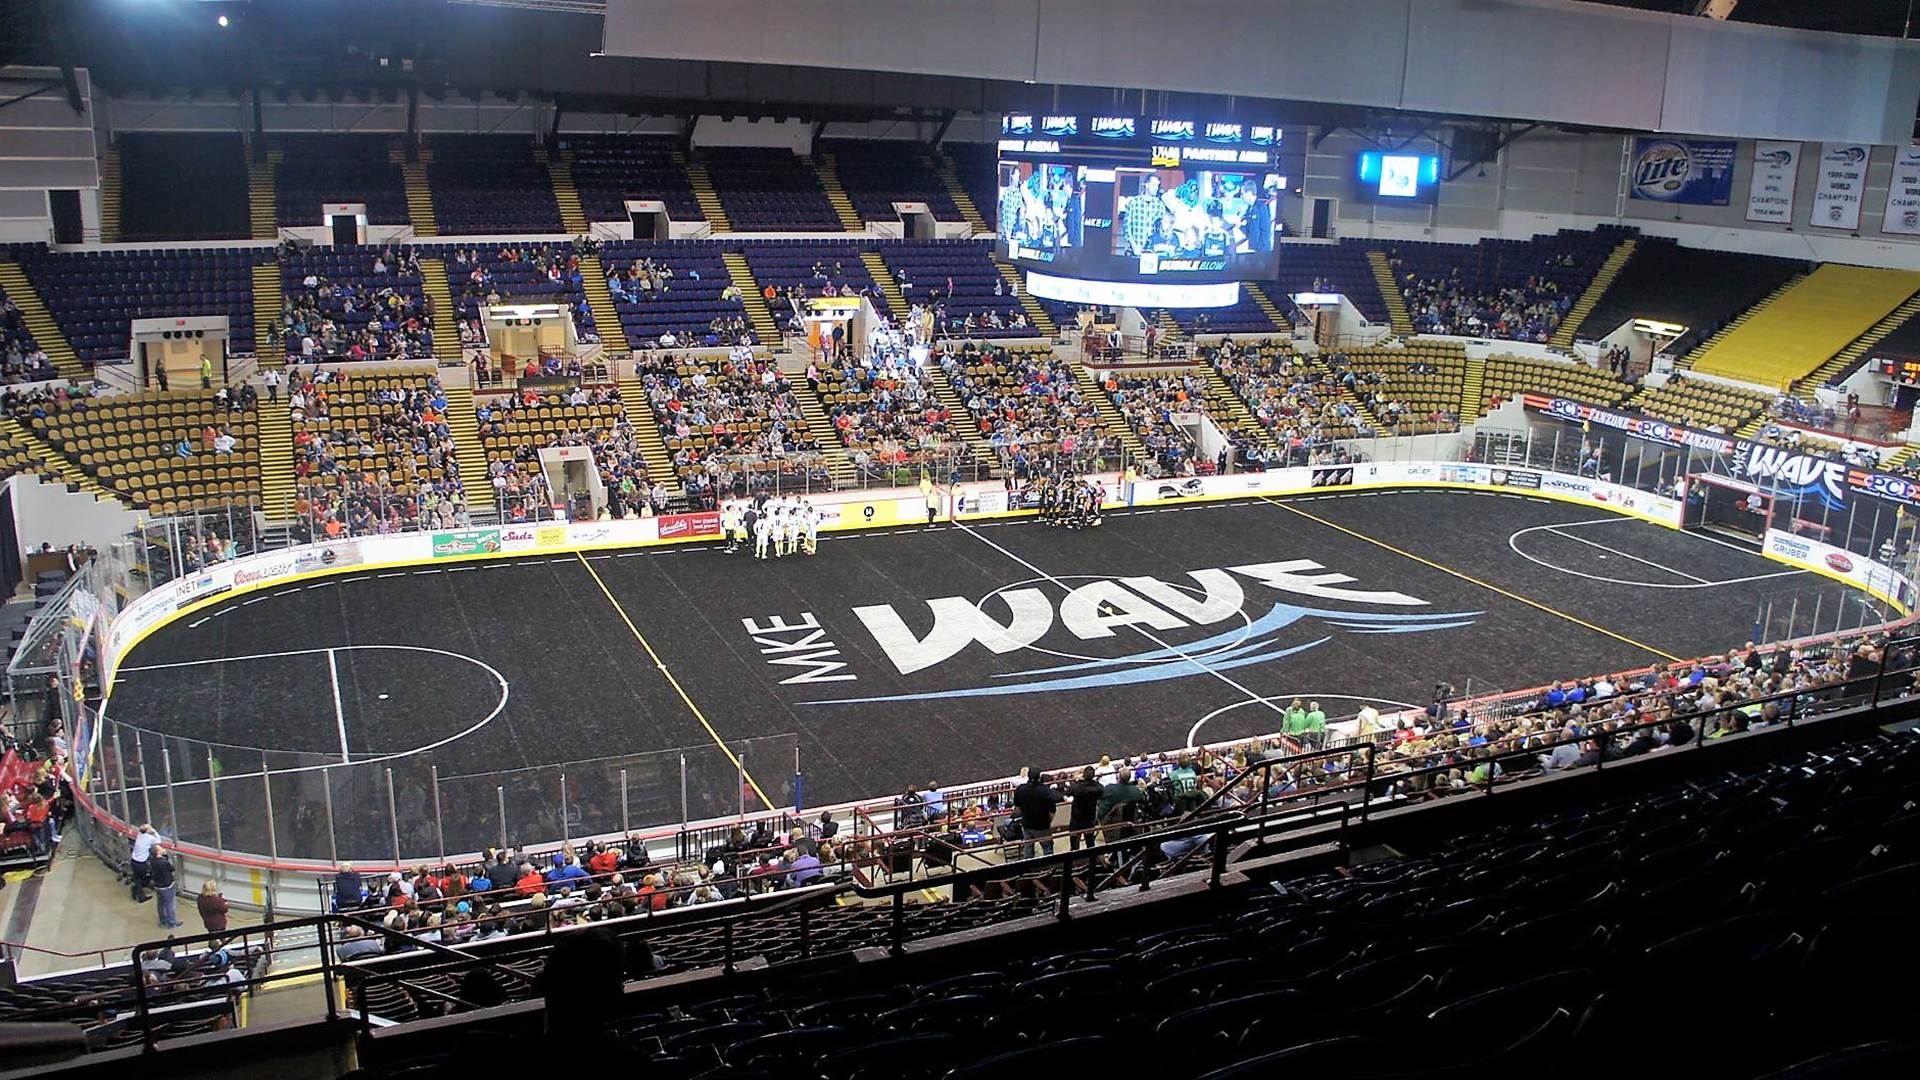 UW-Milwaukee Panther Arena - Stadium in Milwaukee, WI